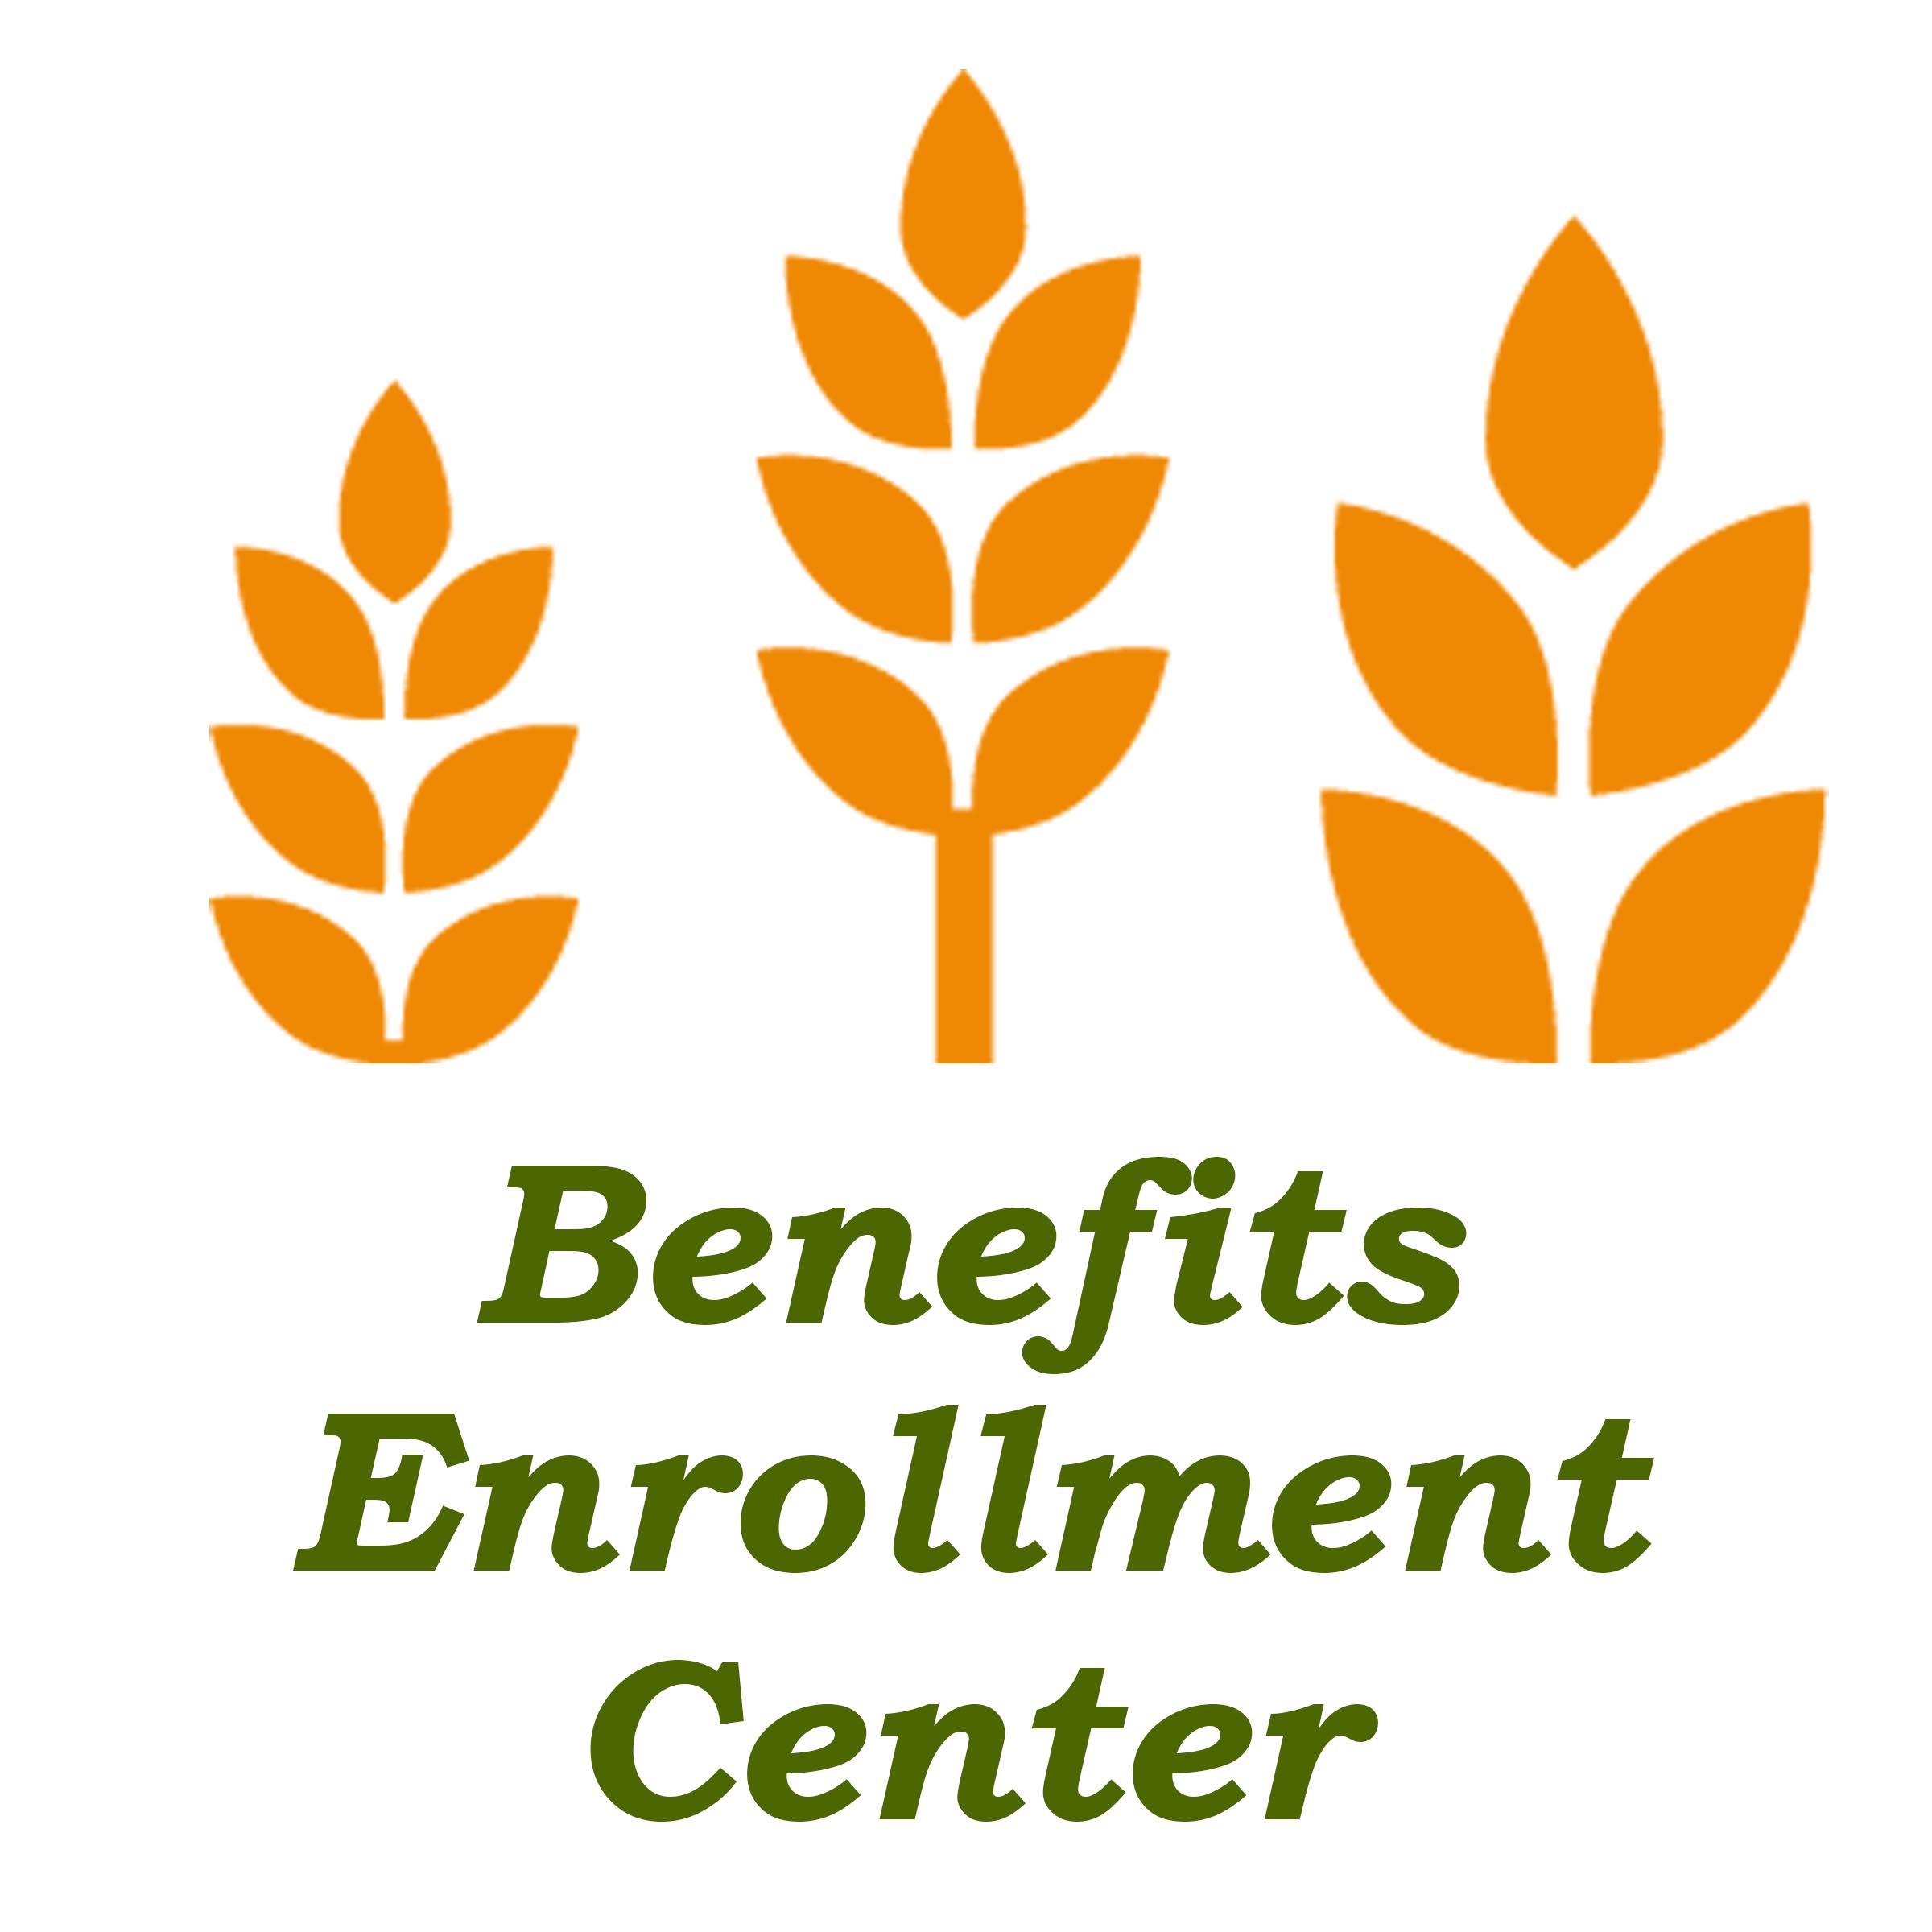 Benefits Enrollment Center